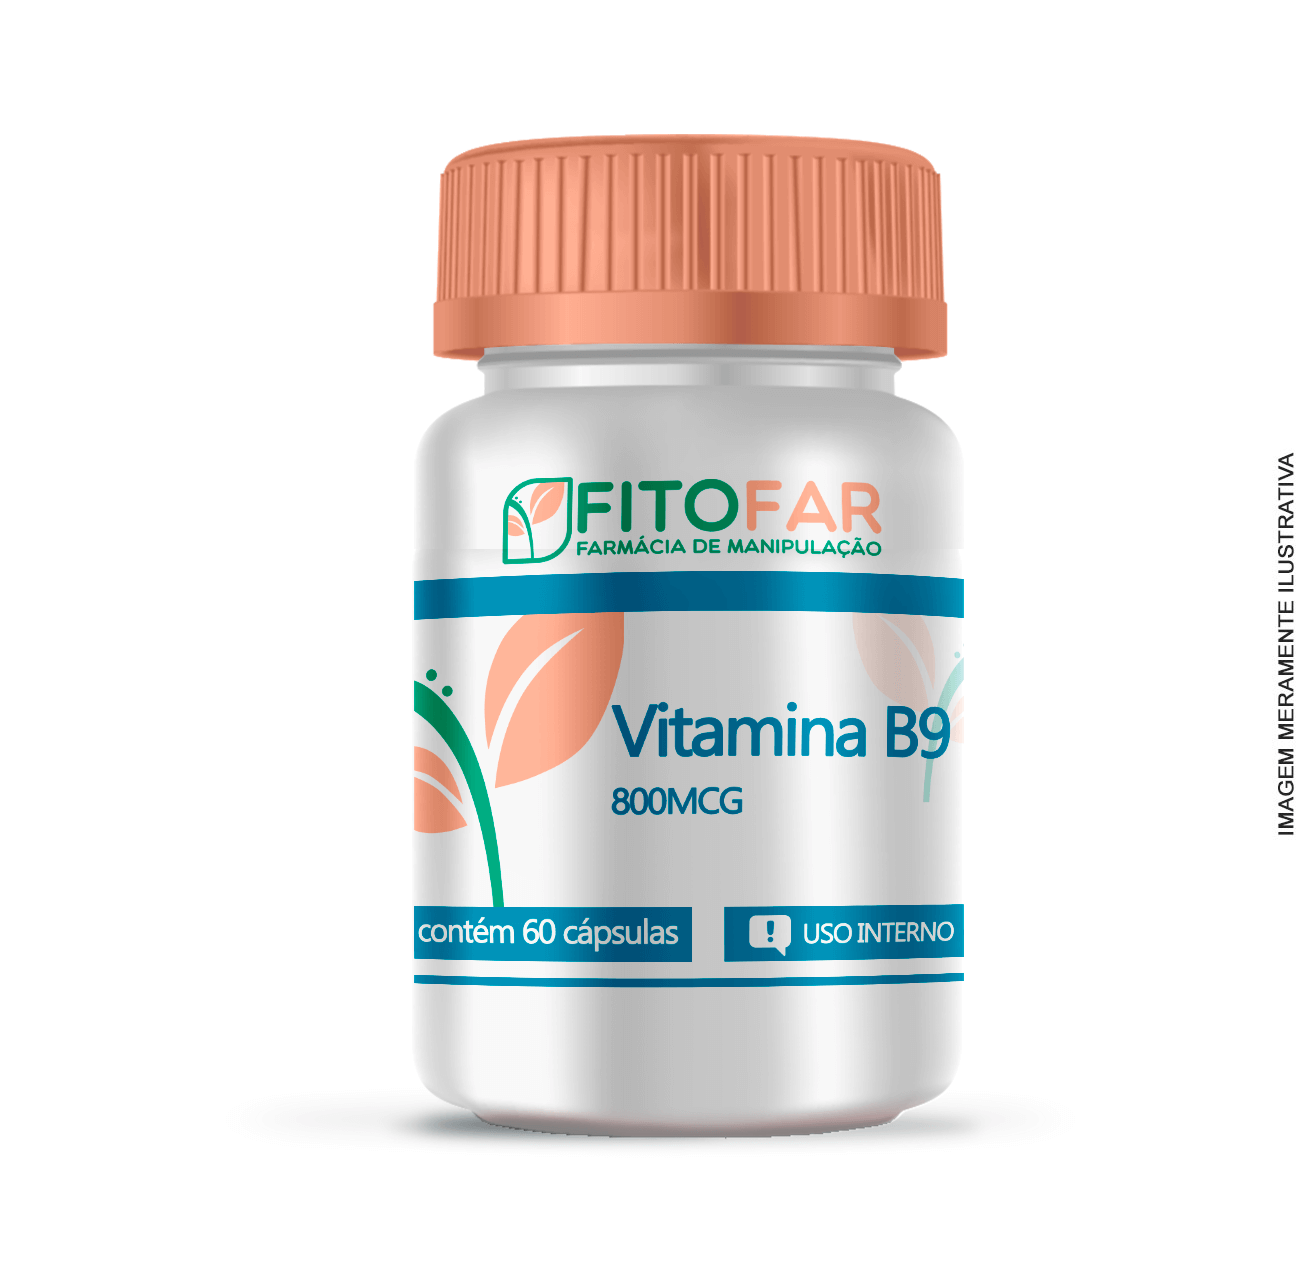 Vitamina B9 800MCG